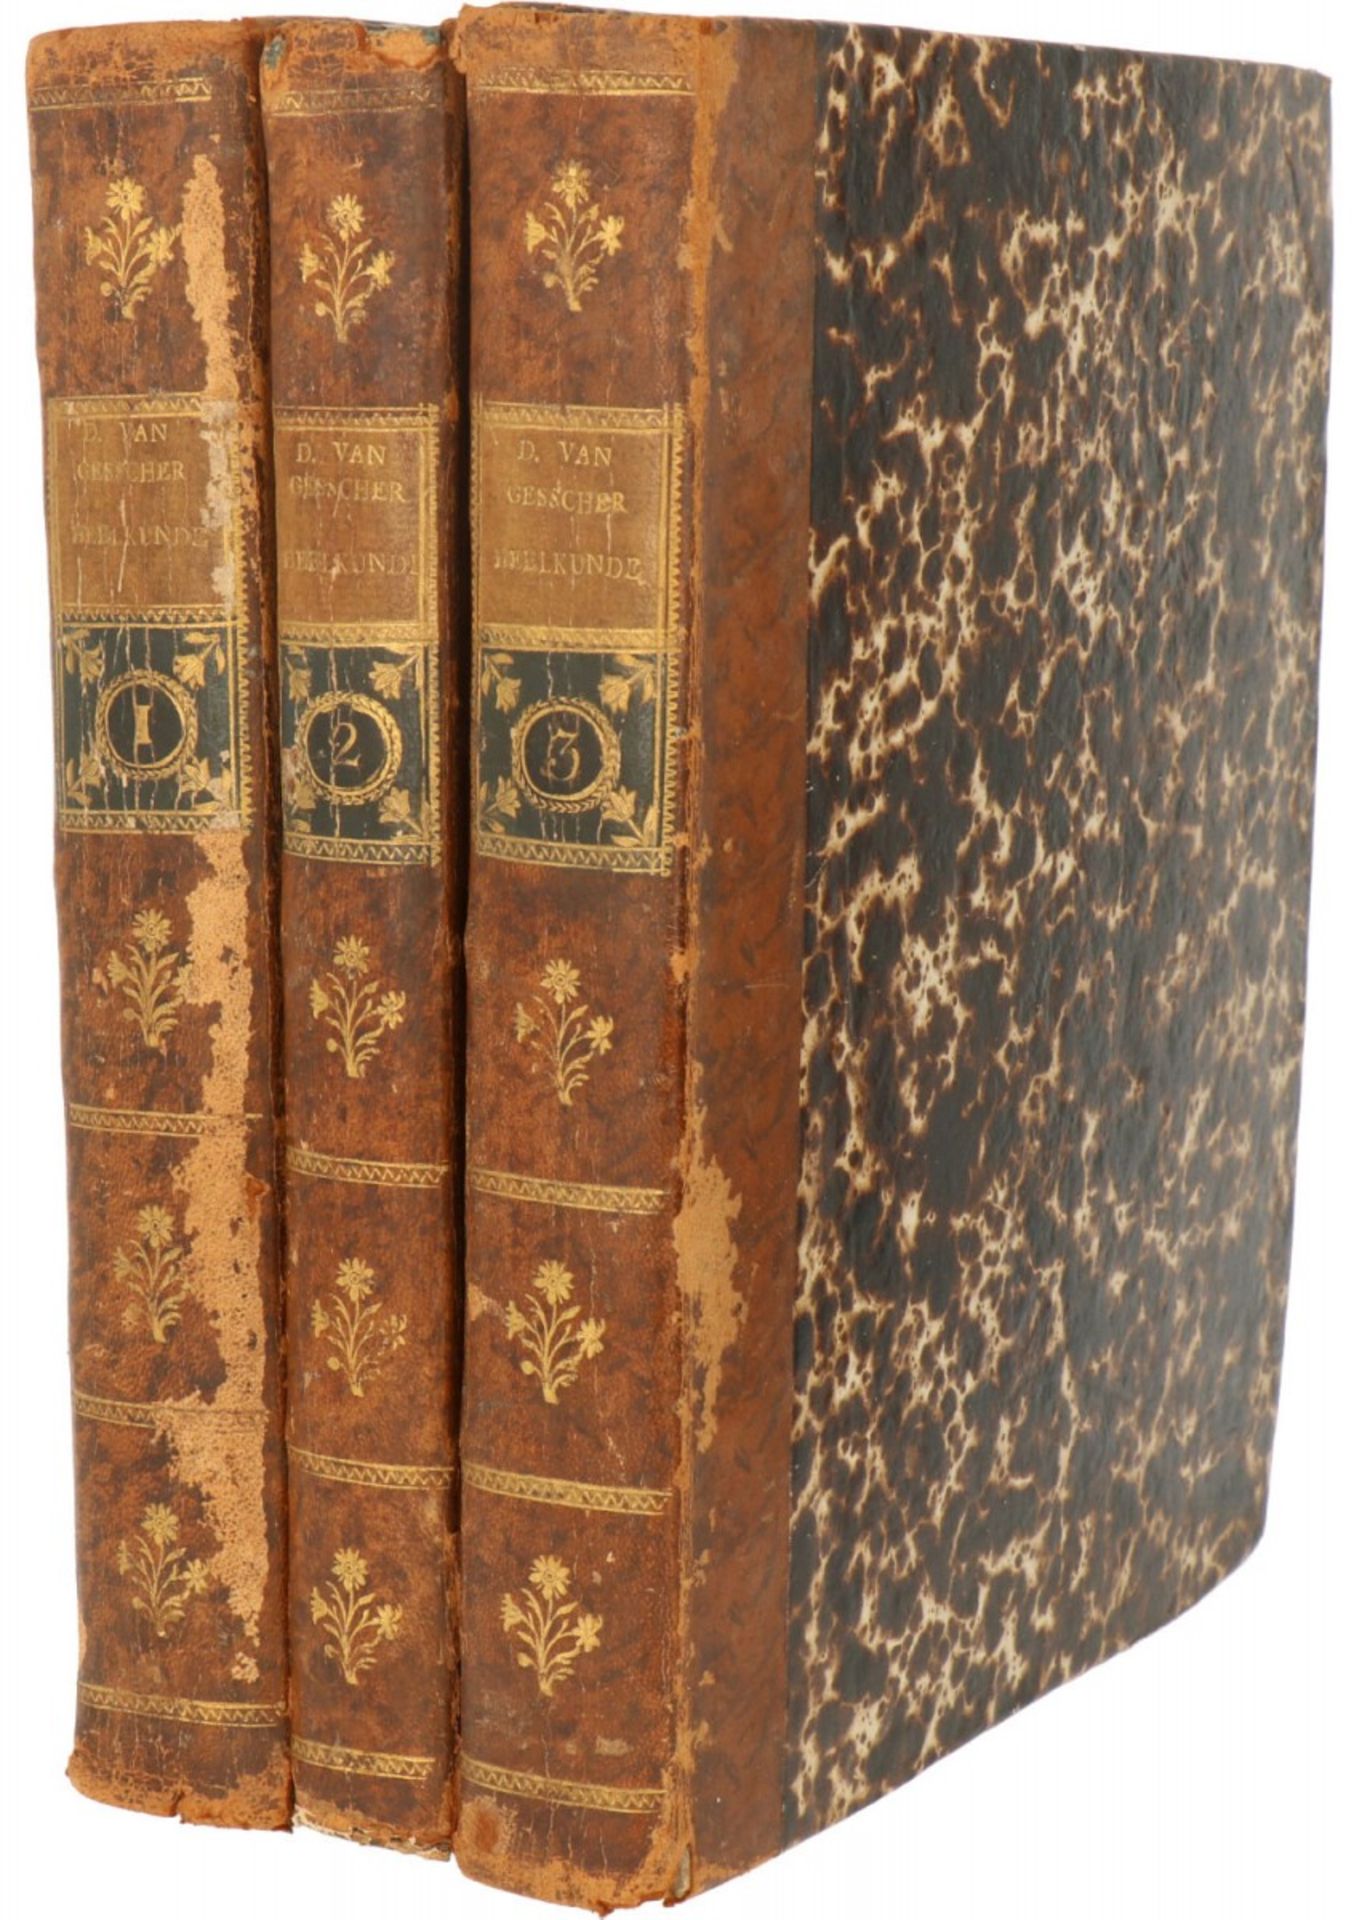 David van Gesscher, A convolute of (3) medical handbooks, Dutch, 18th century.